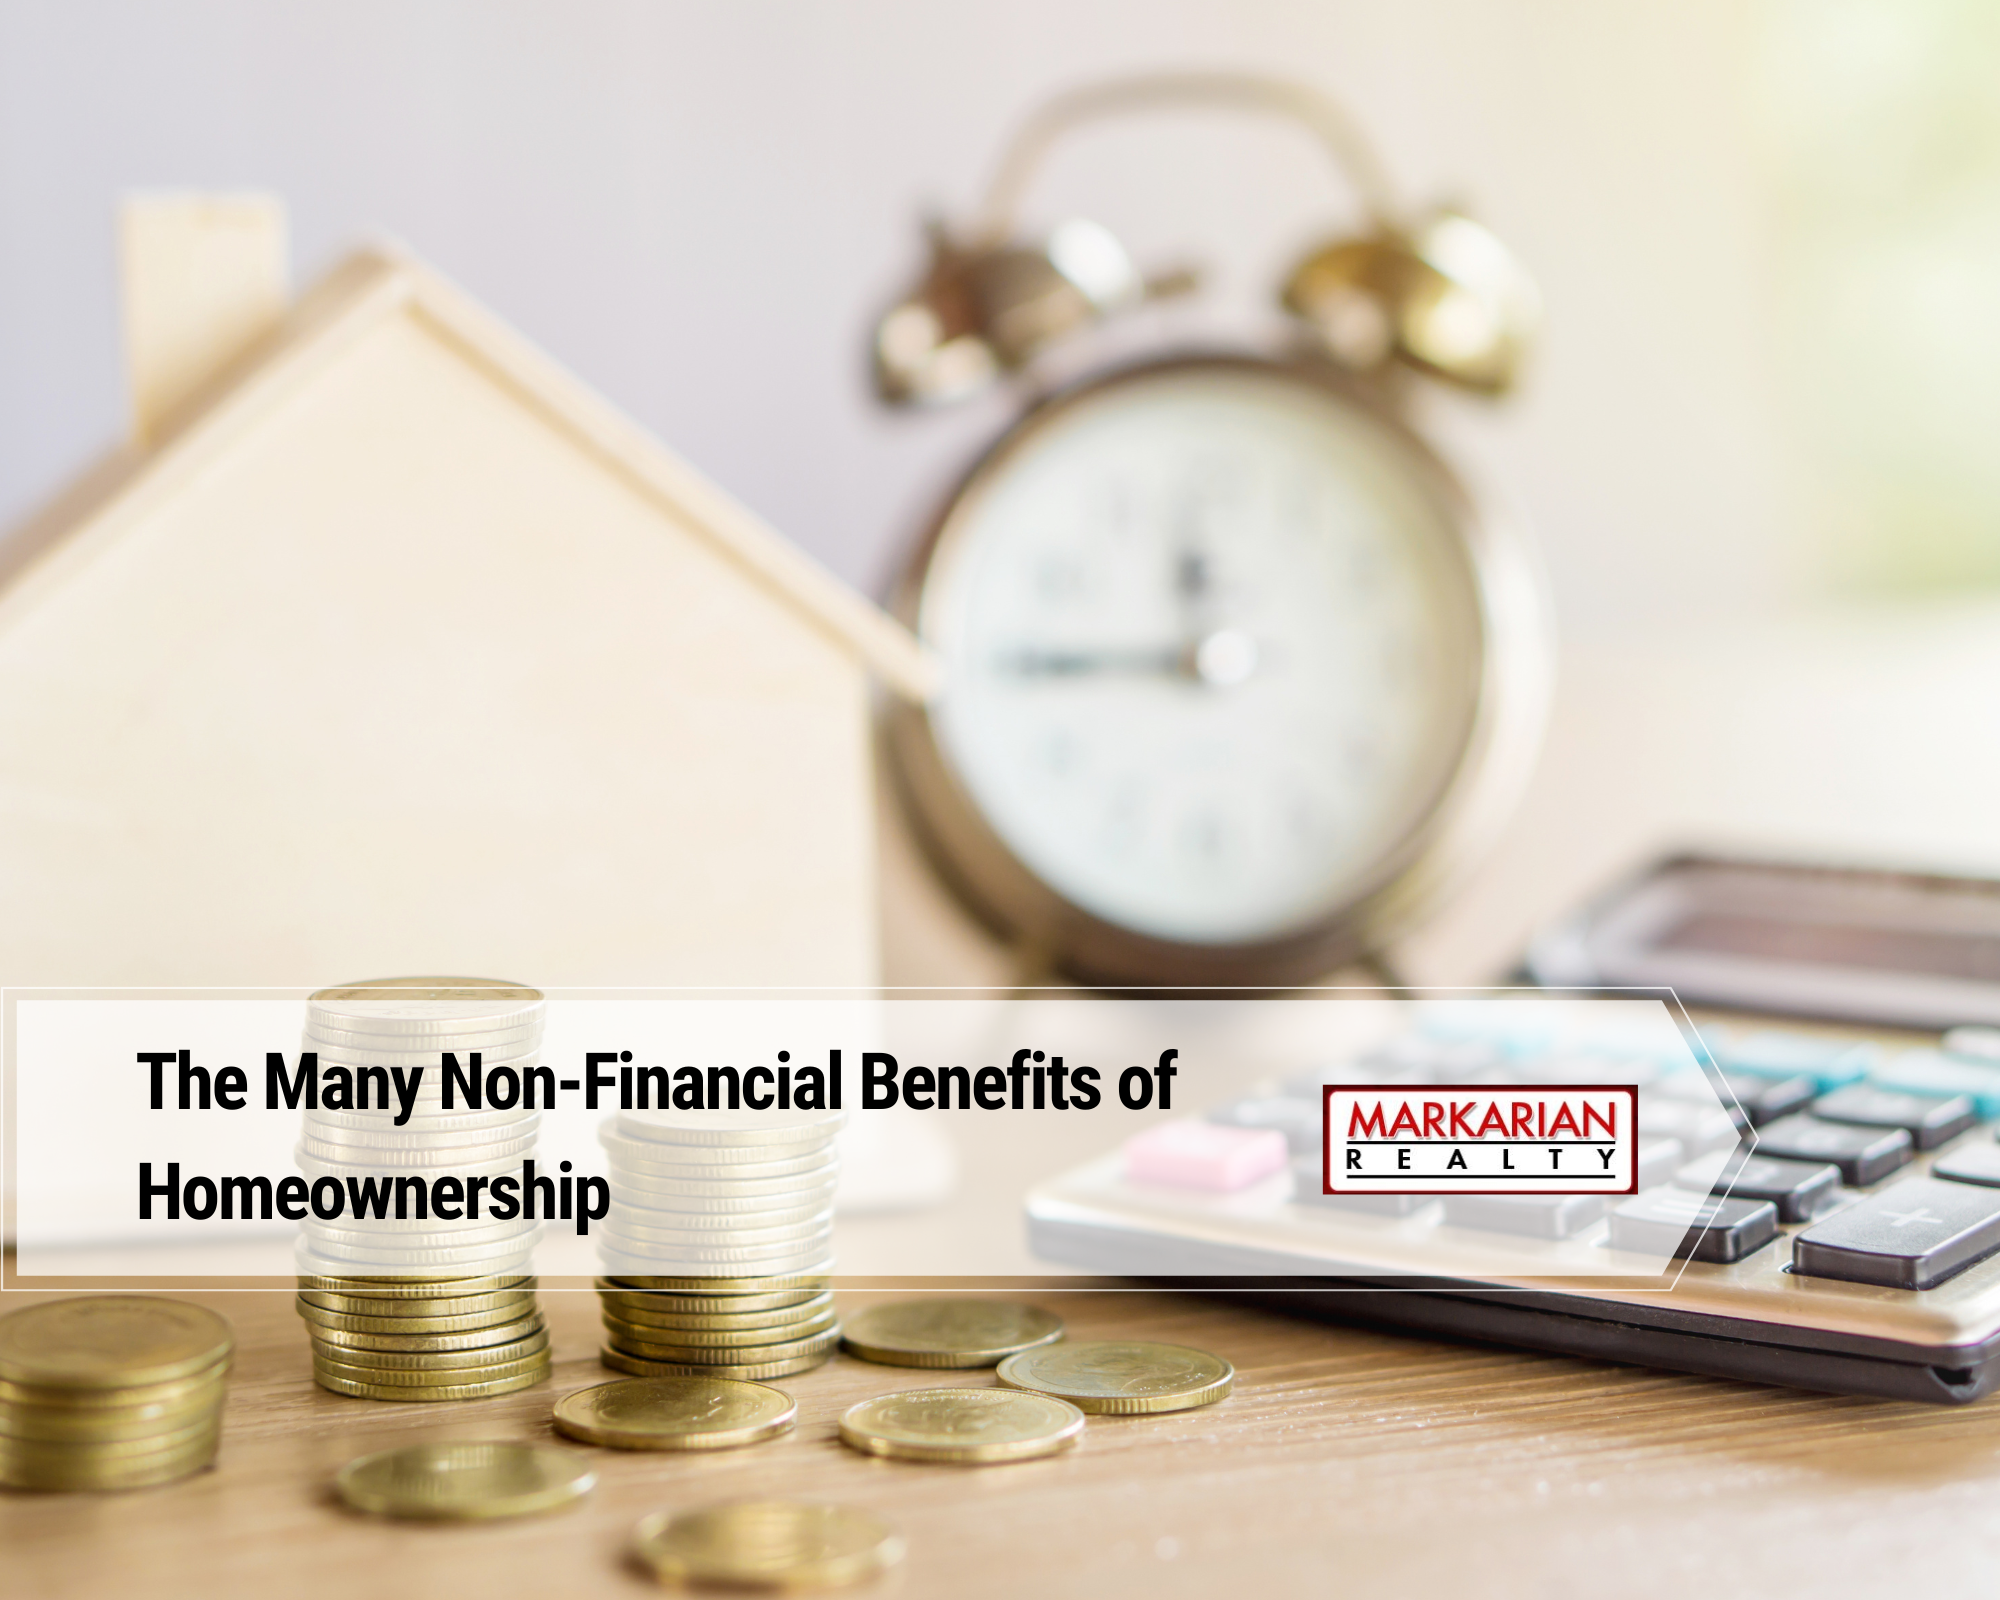 The Many Non-Financial Benefits of Homeownership